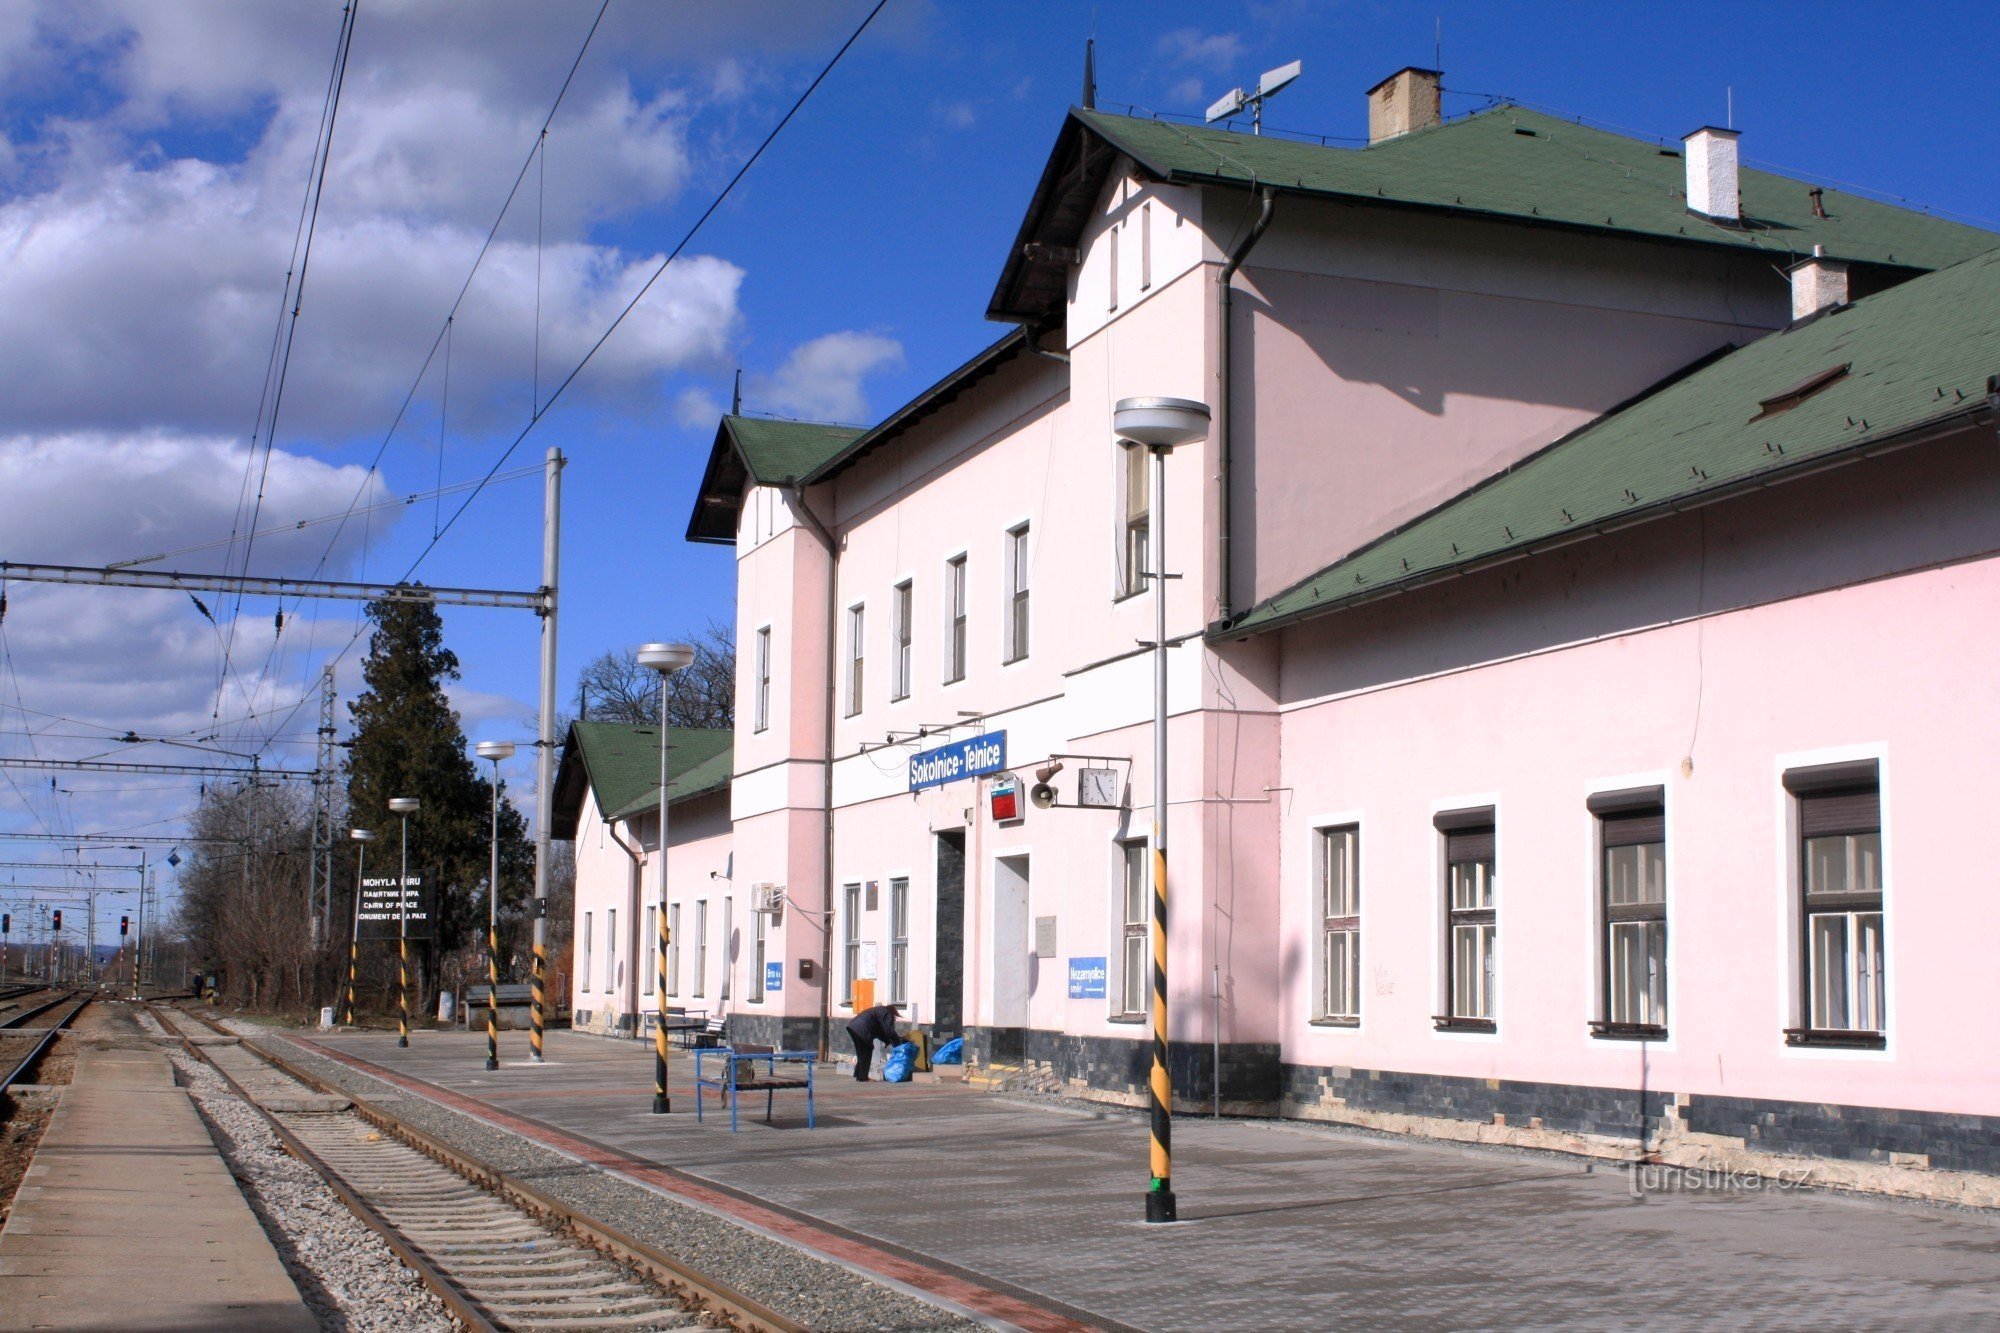 Sokolnice-Telnice - rautatieasema